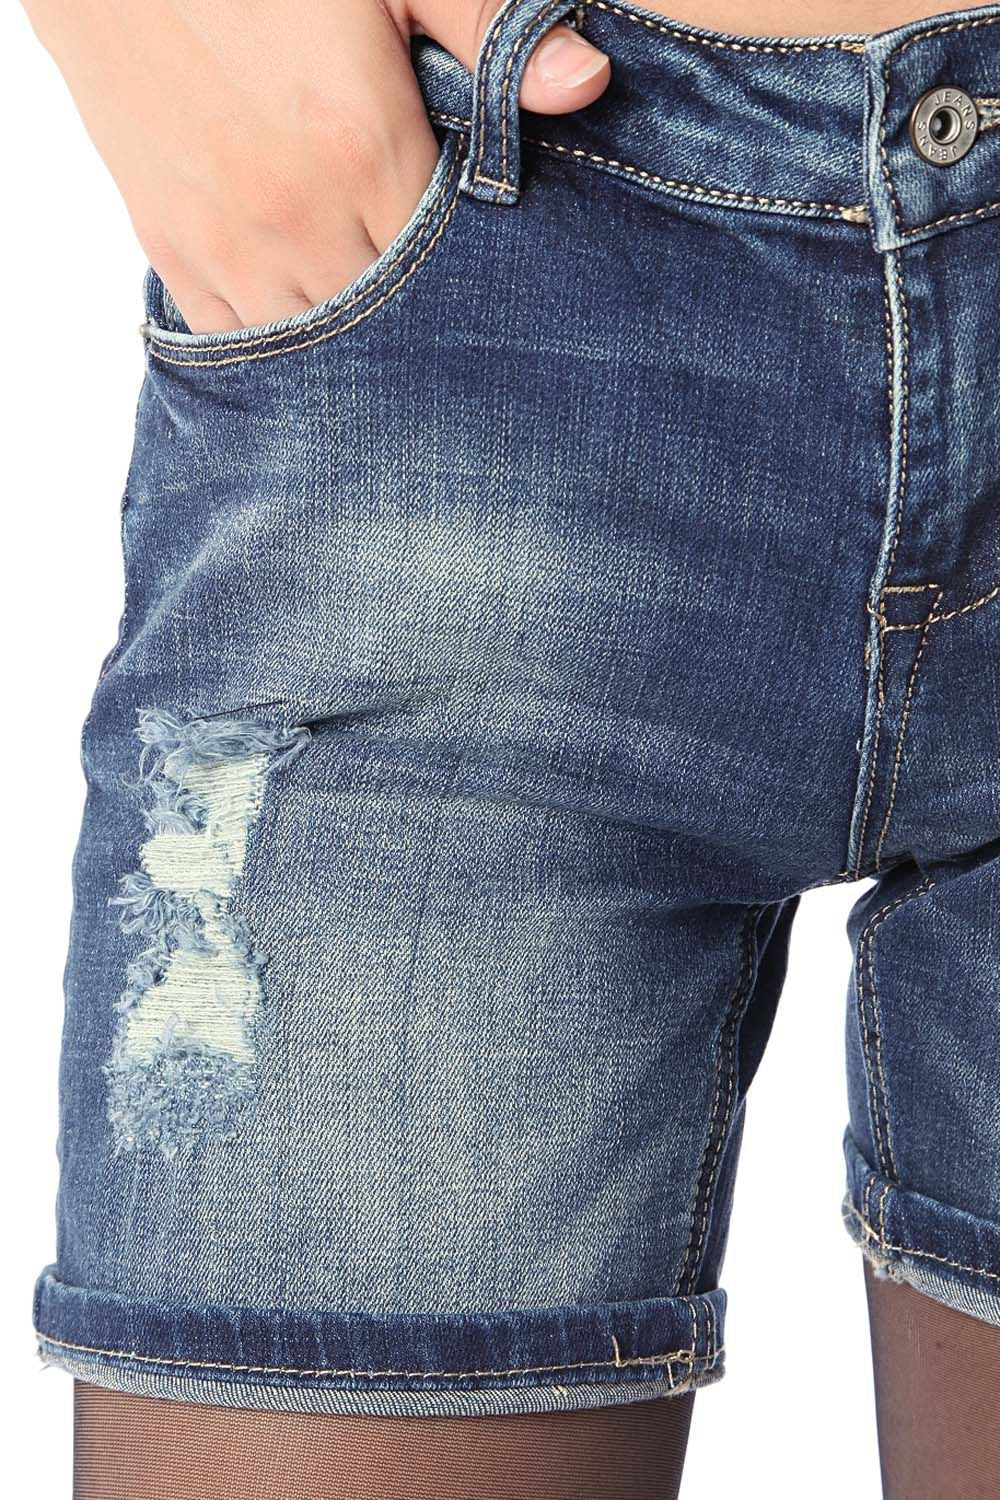 Denim shorts with rips - Szua Store